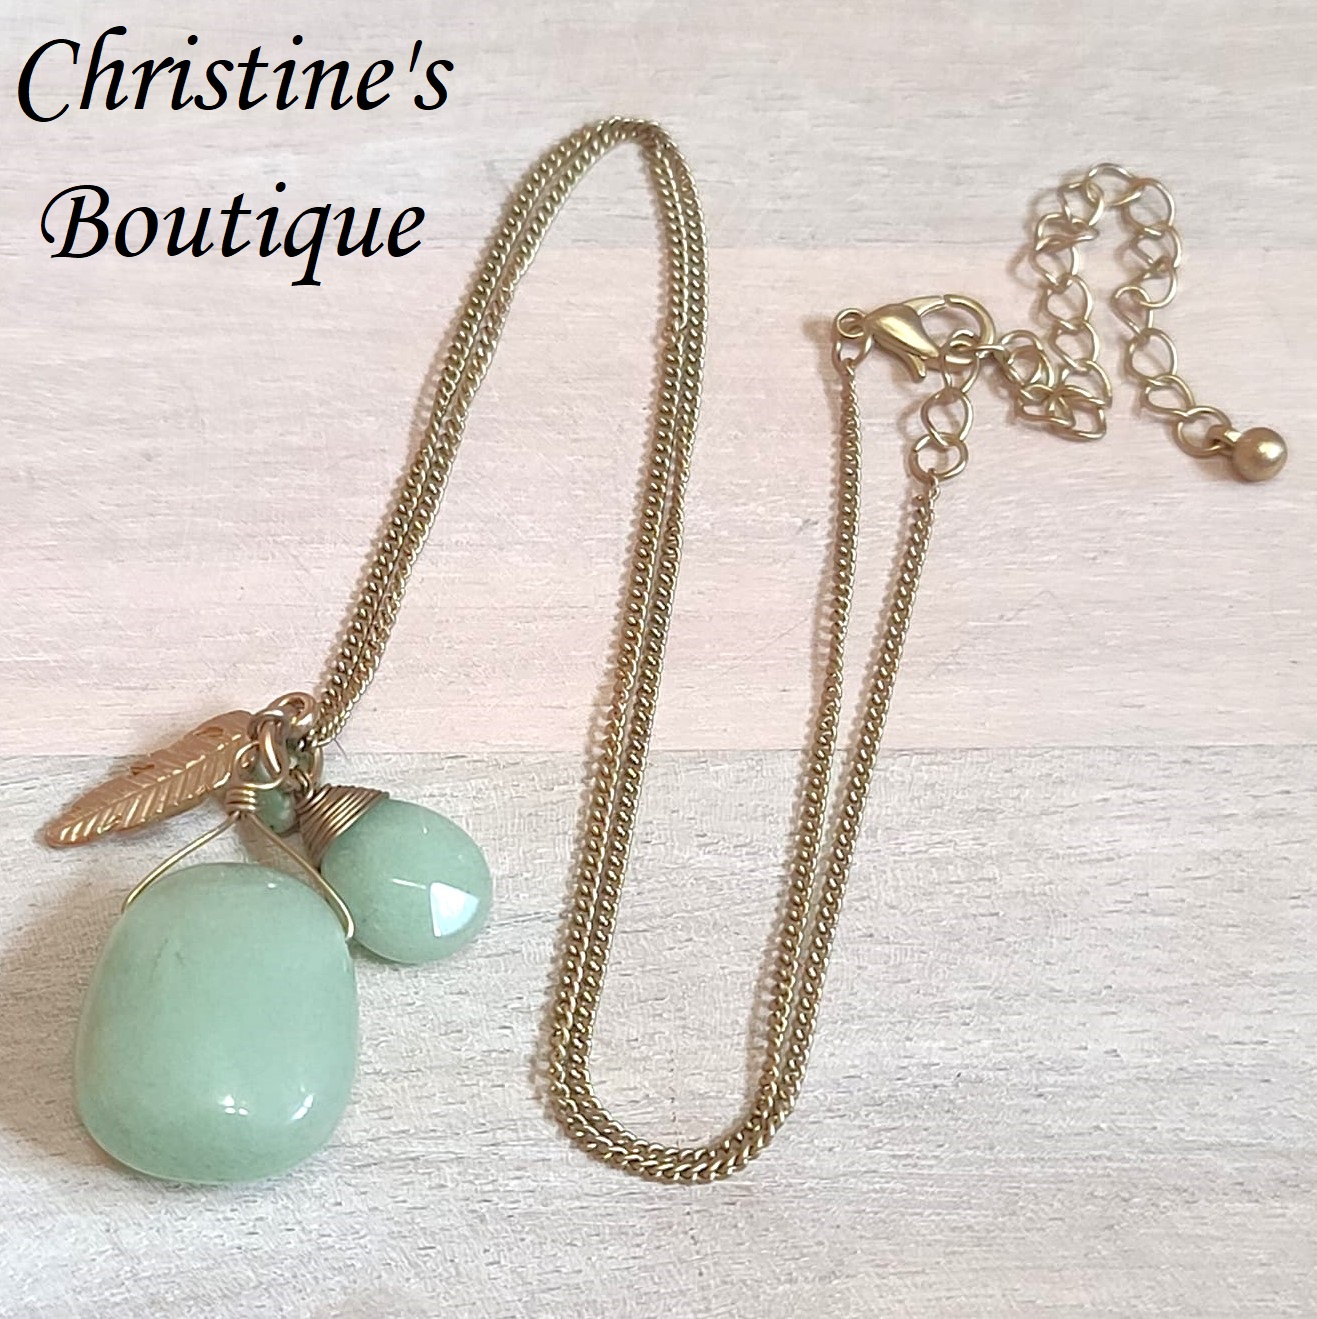 Gemstone pendant necklace, jade gemstone pendant, with feather charm, necklace